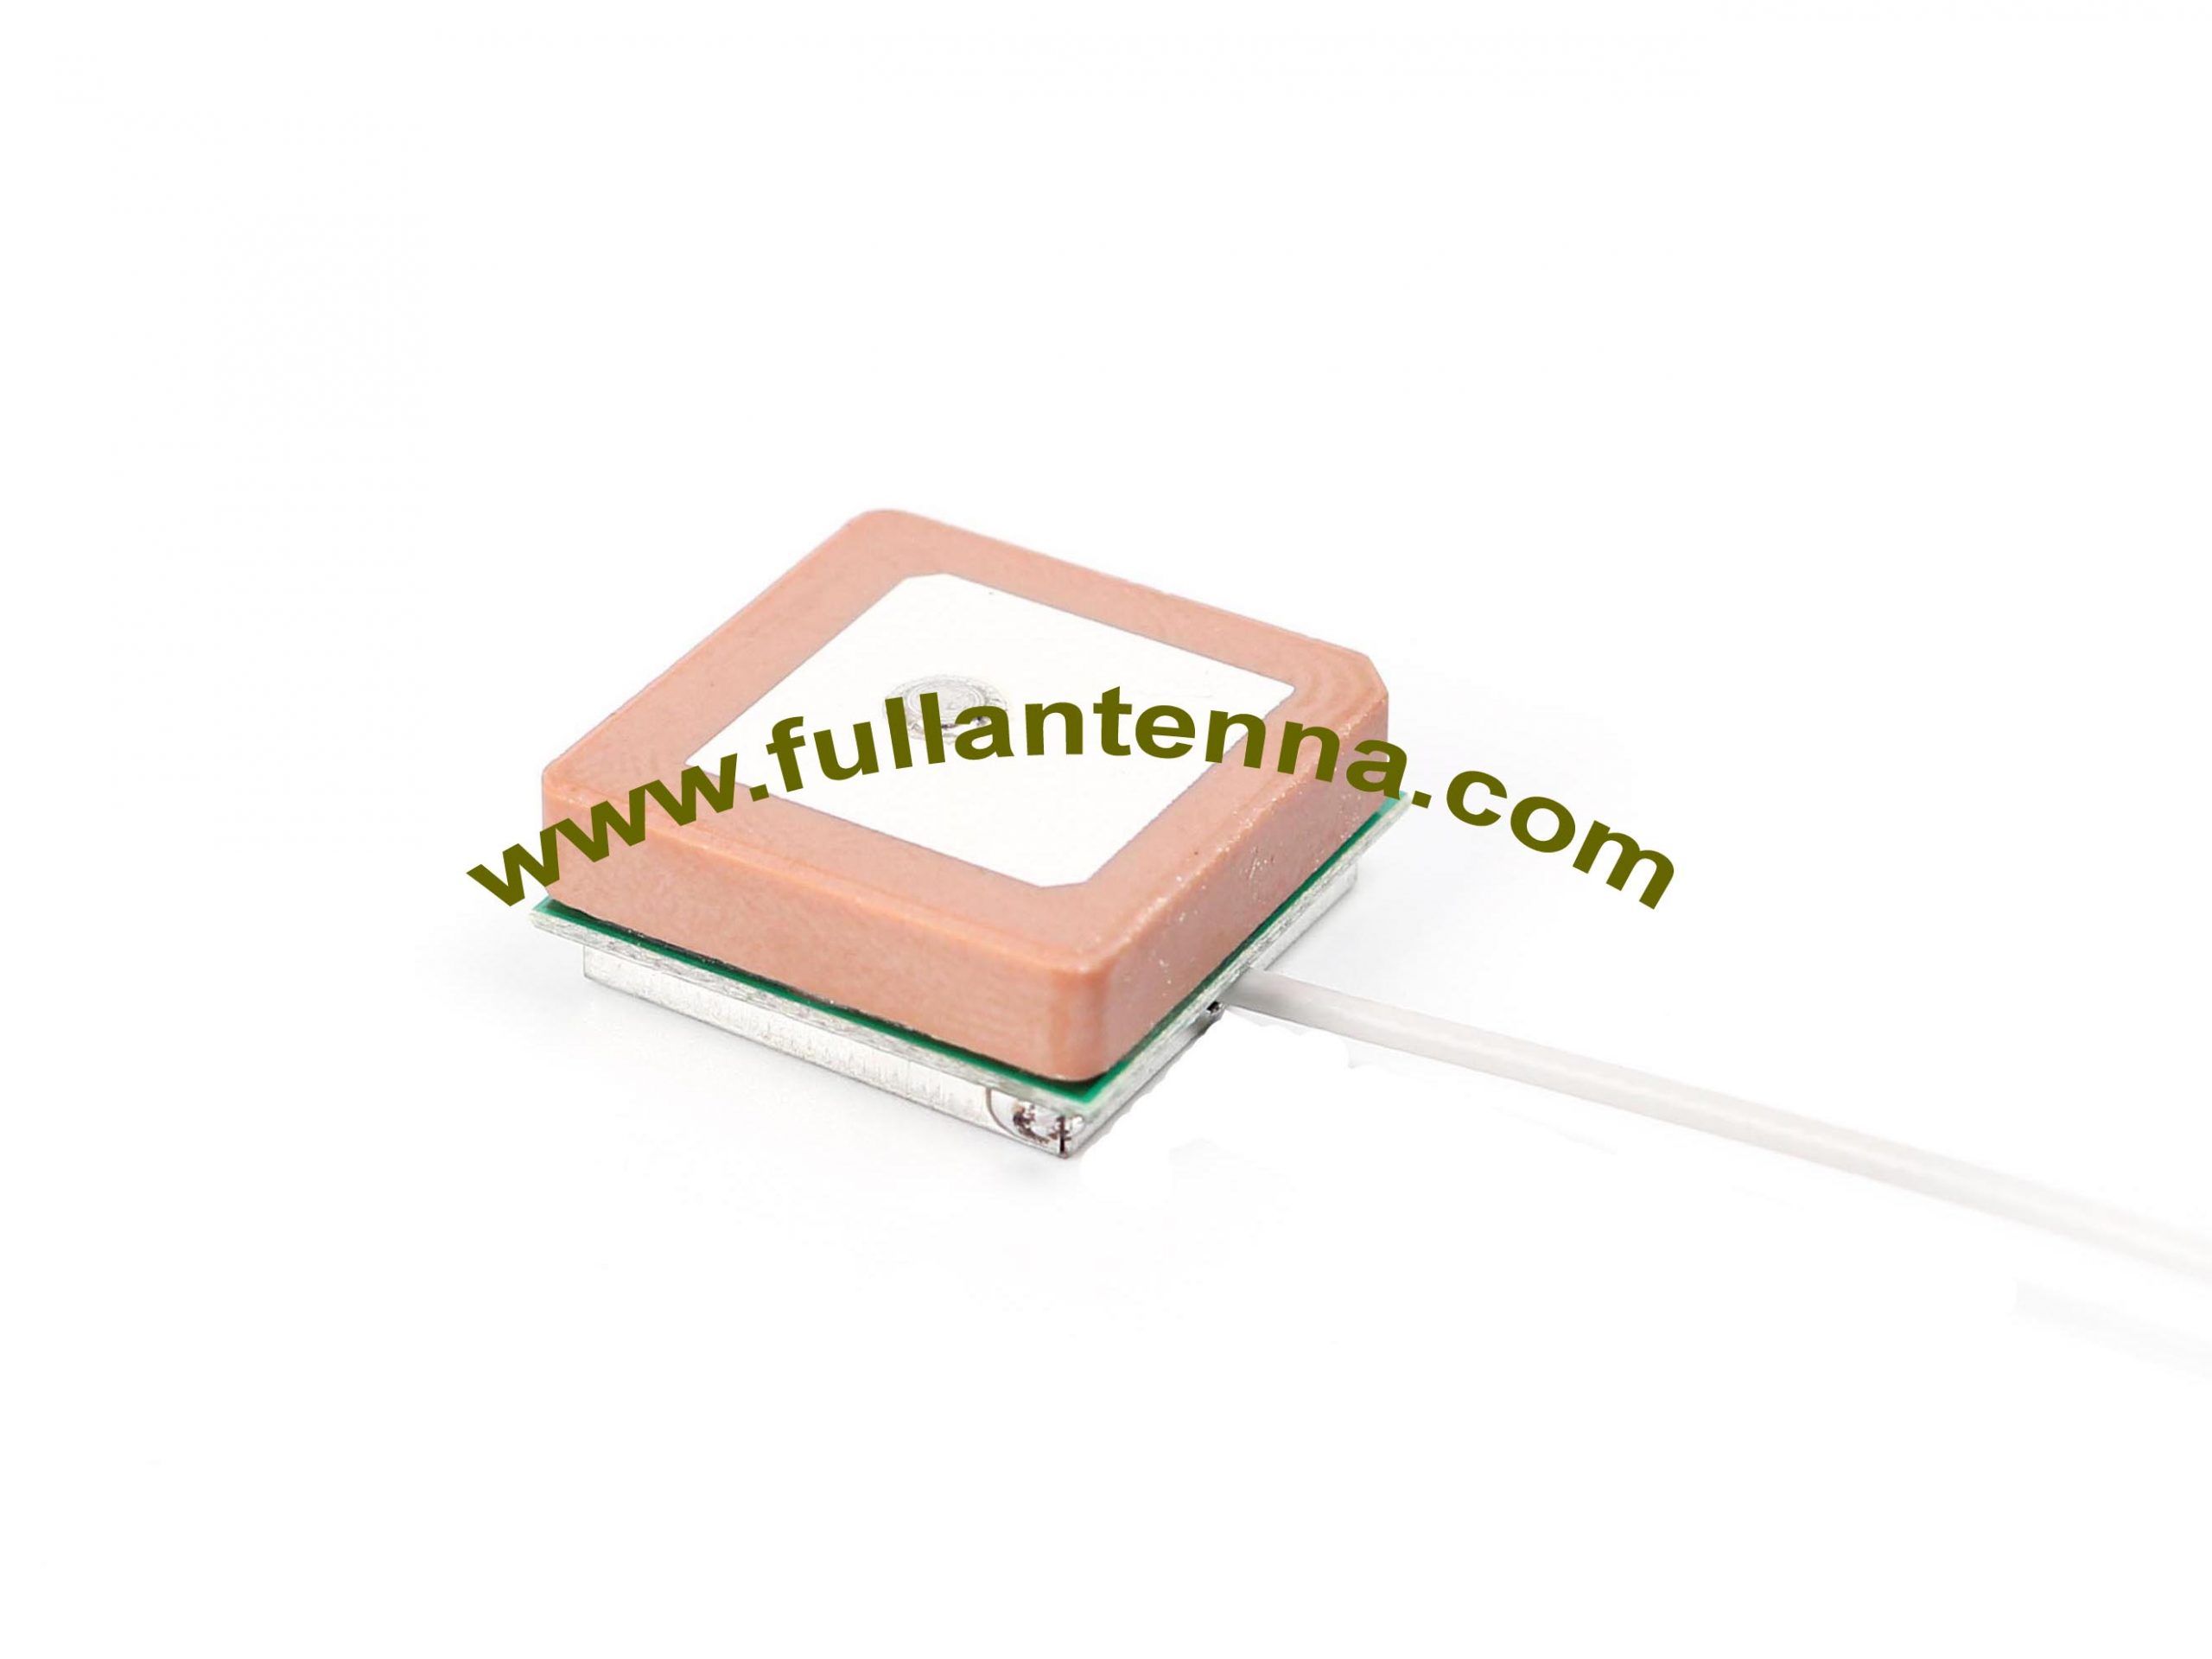 P / N: FAGPSGLONASS.18, Antena GPS Glonass incorporada, venta caliente de antena interna Gnss